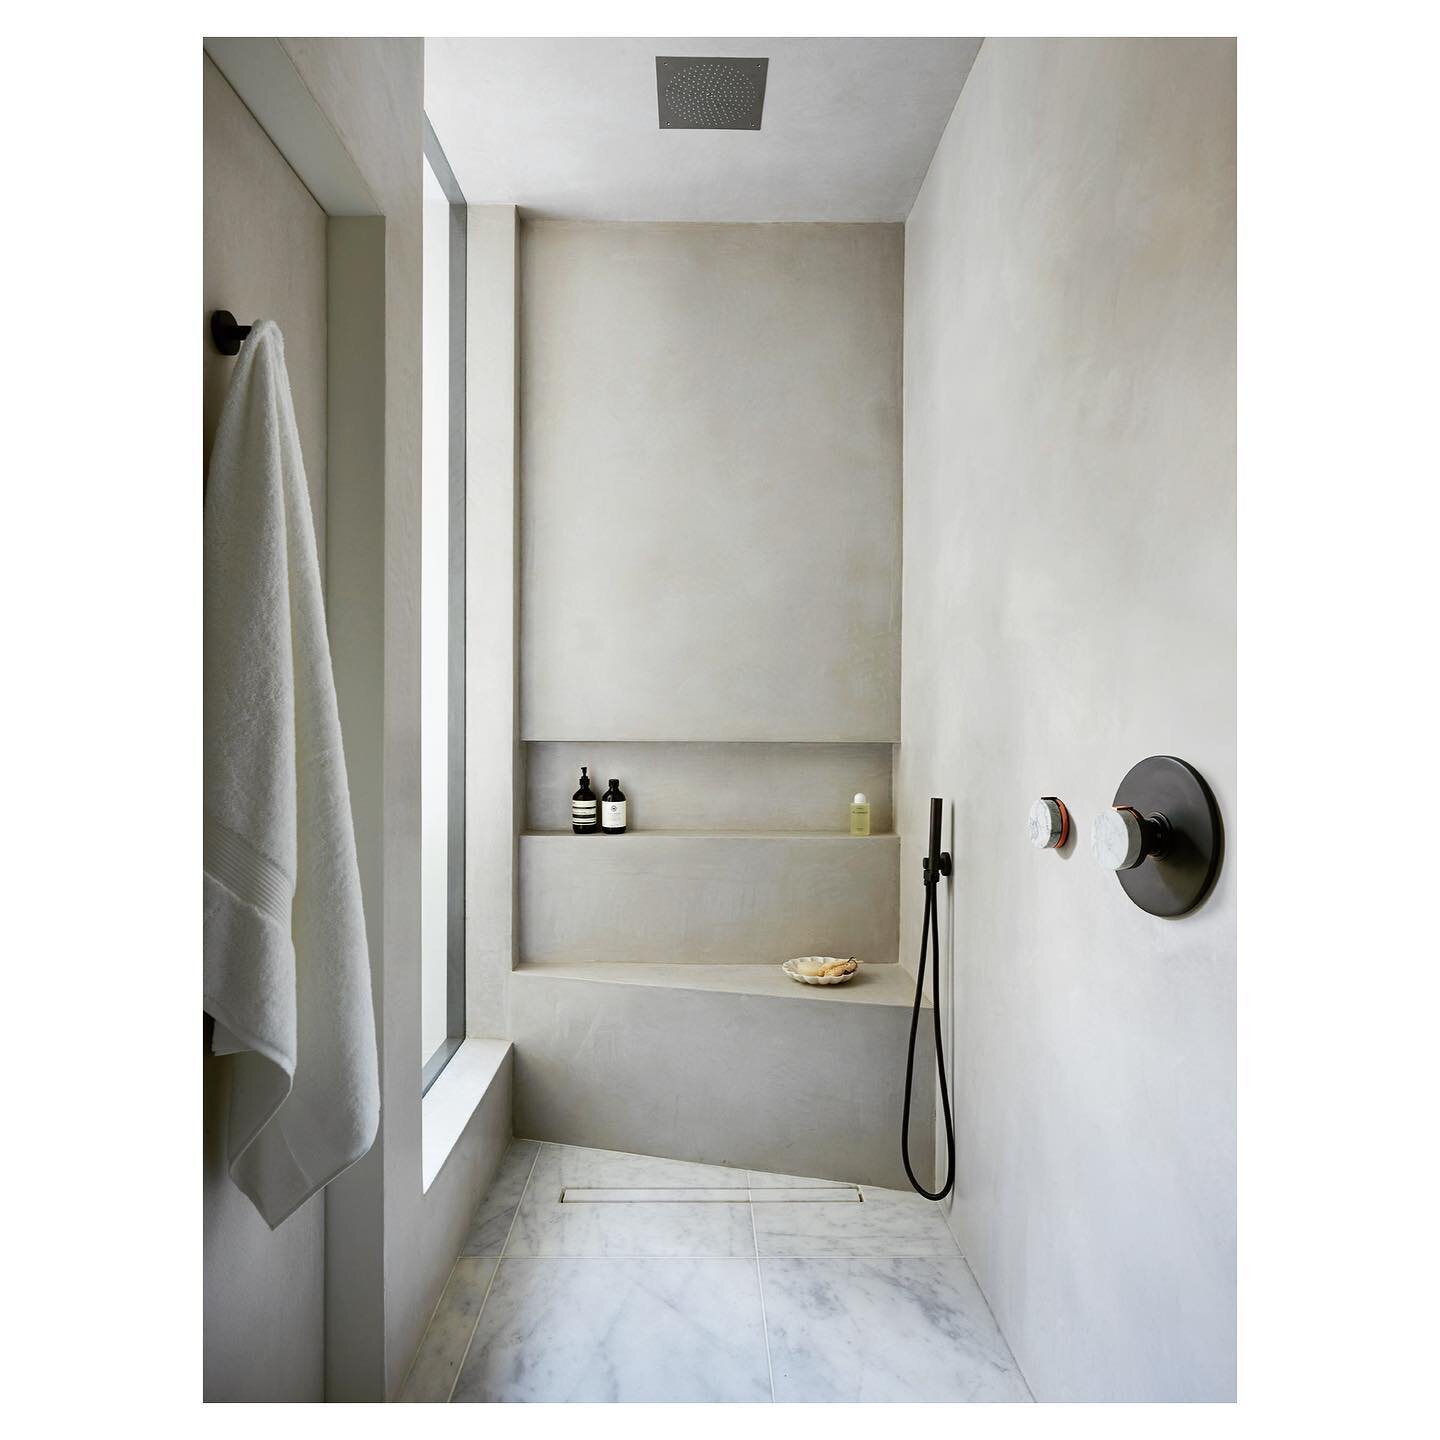 #bathroom #lifestyle #taps #lighting #design #interiordesign #architecture #interiors #styling #naturallight #interiorphotography #props 
#📷darrenchung74 #bathroominspo #shower